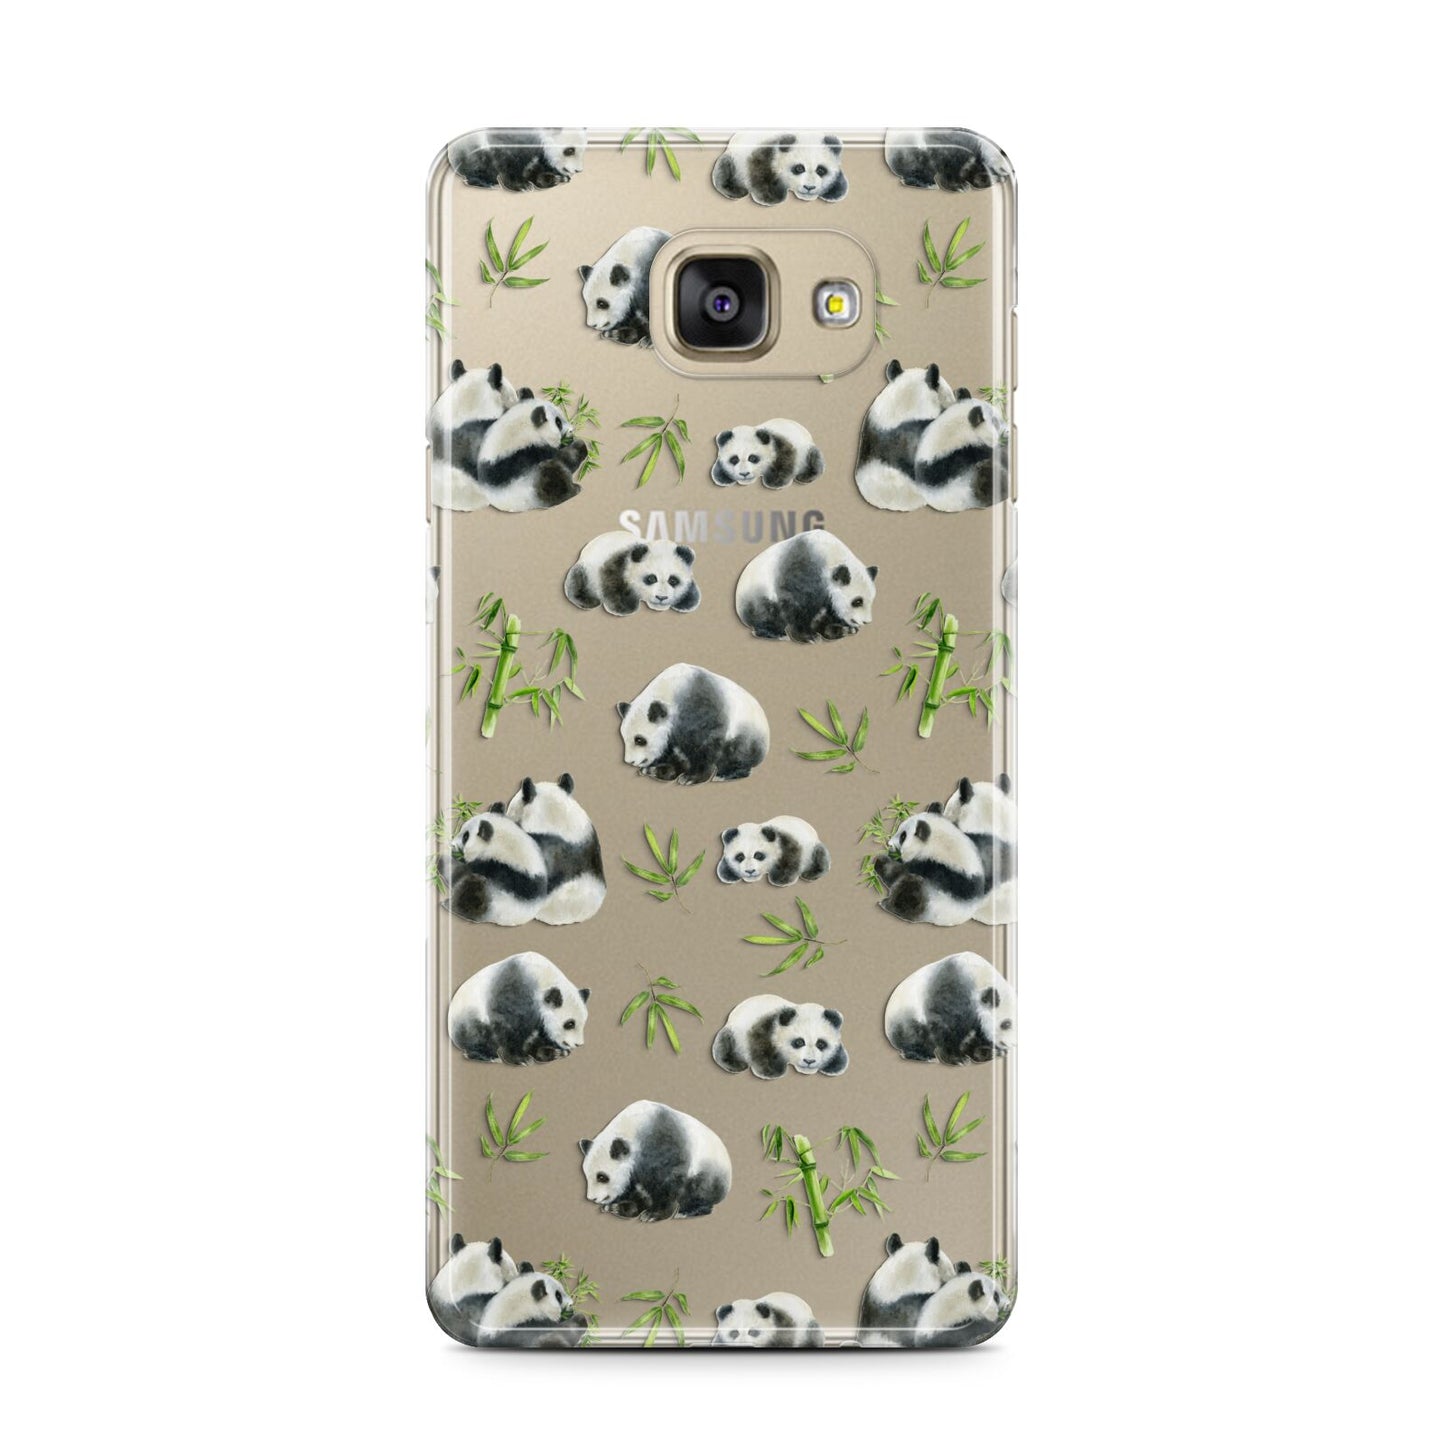 Panda Samsung Galaxy A7 2016 Case on gold phone